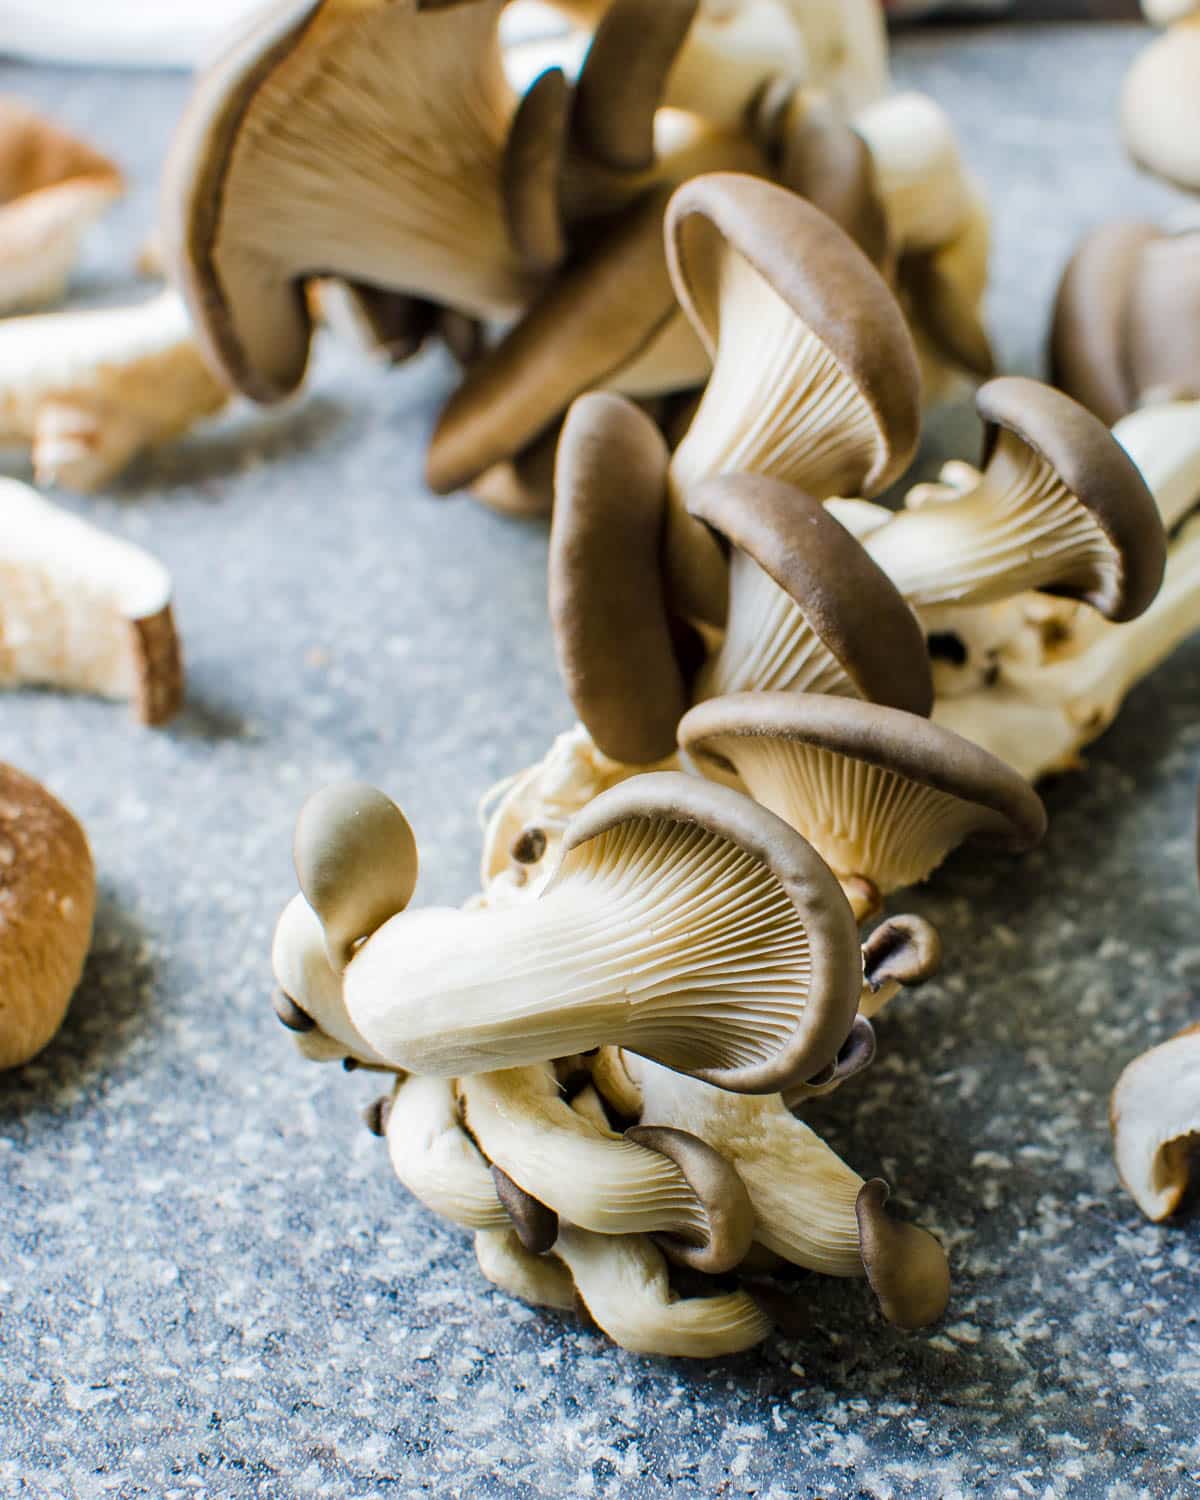 Assorted wild mushrooms.